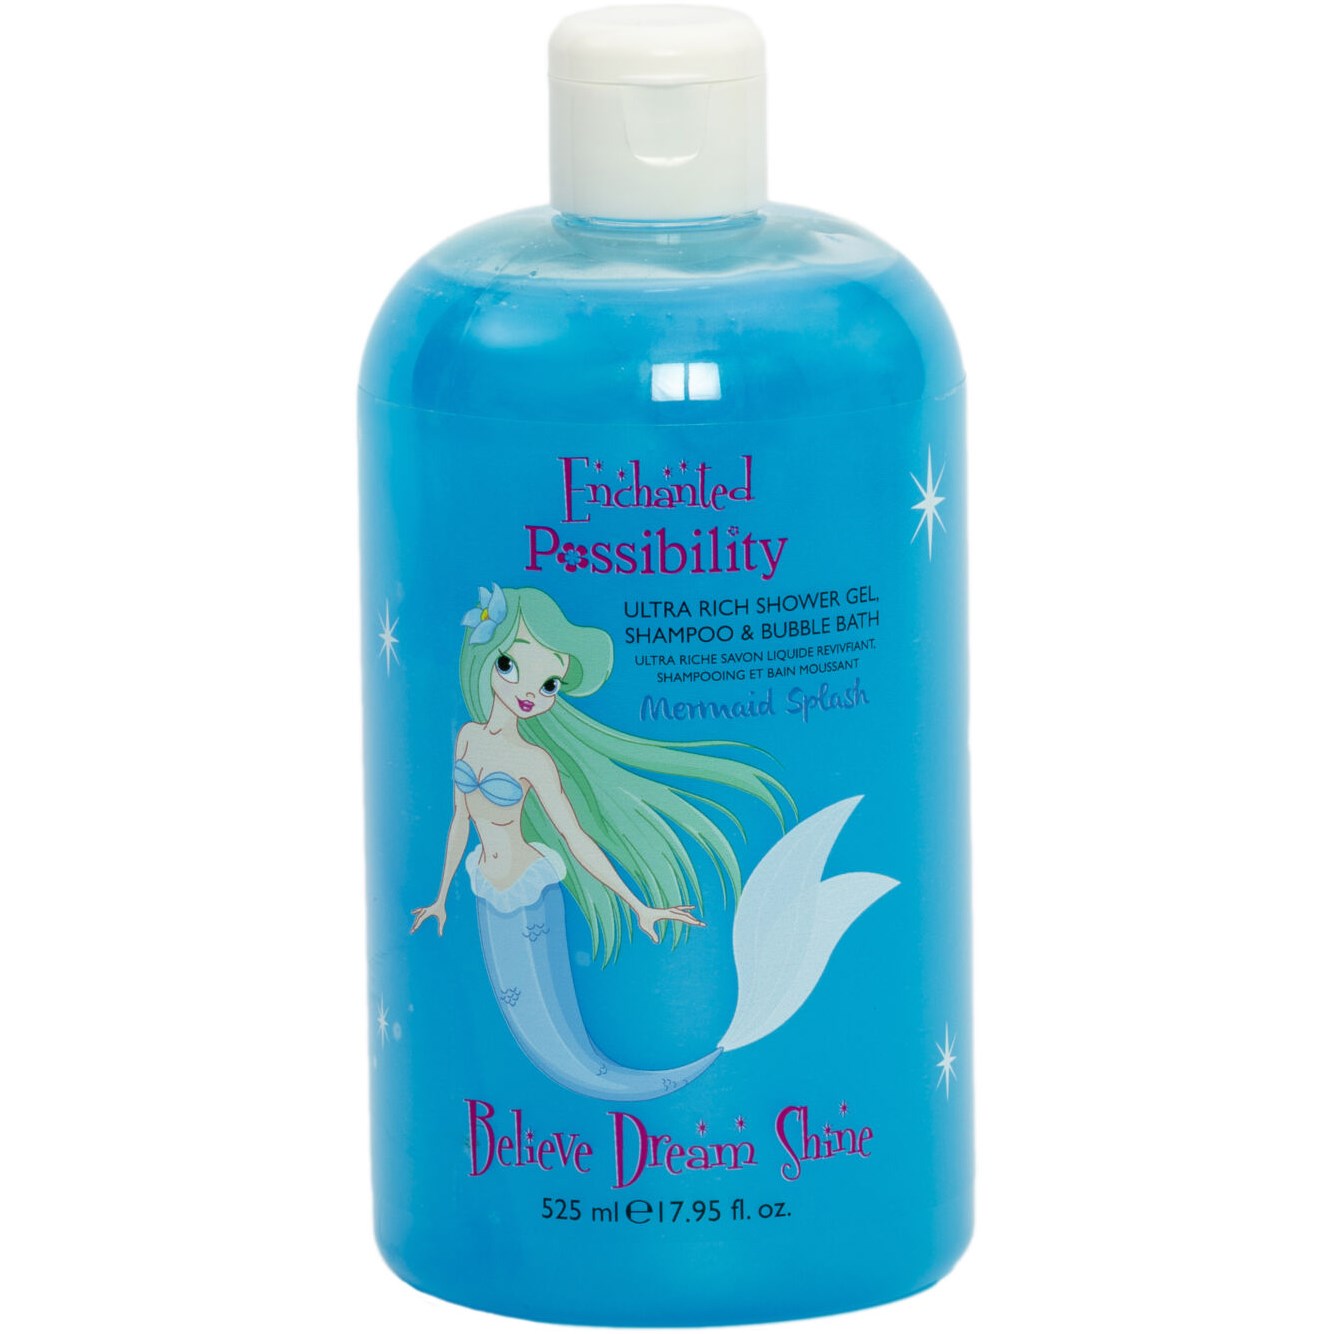 Possibility Shower 3 in 1 Mermaid 525 ml